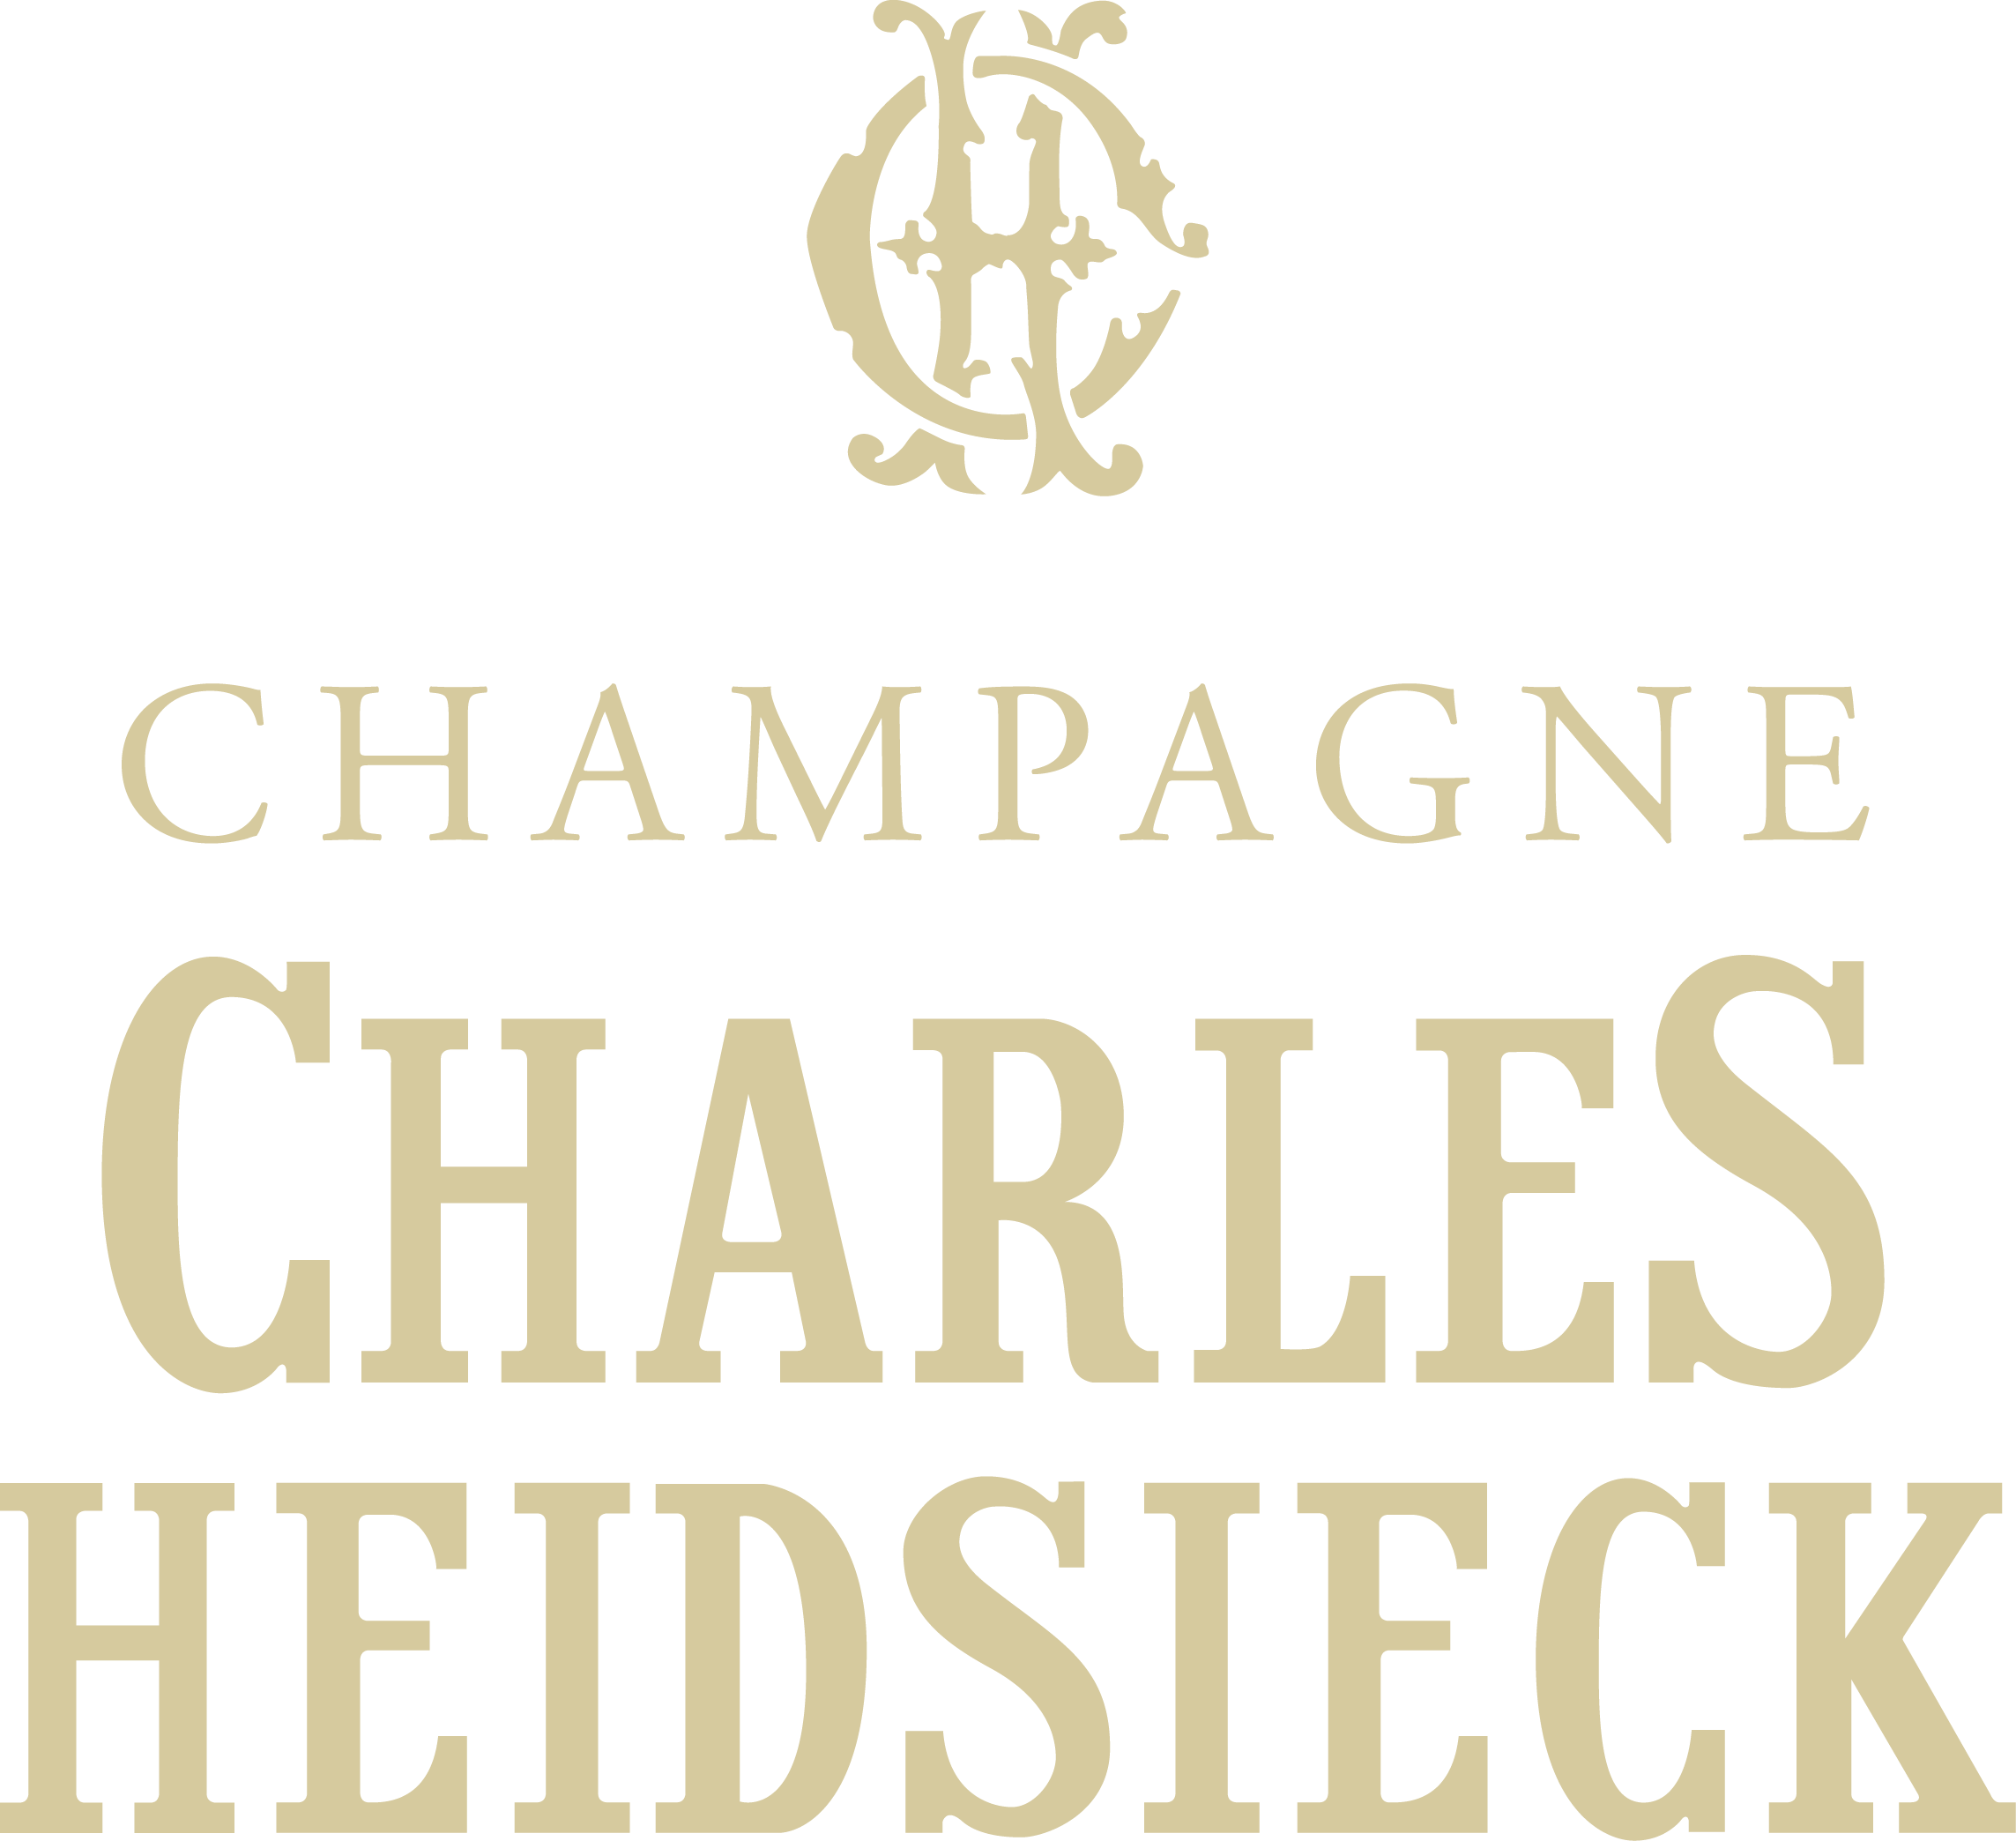 Champagne Charles Heidsieck Logo PNG HD Quality